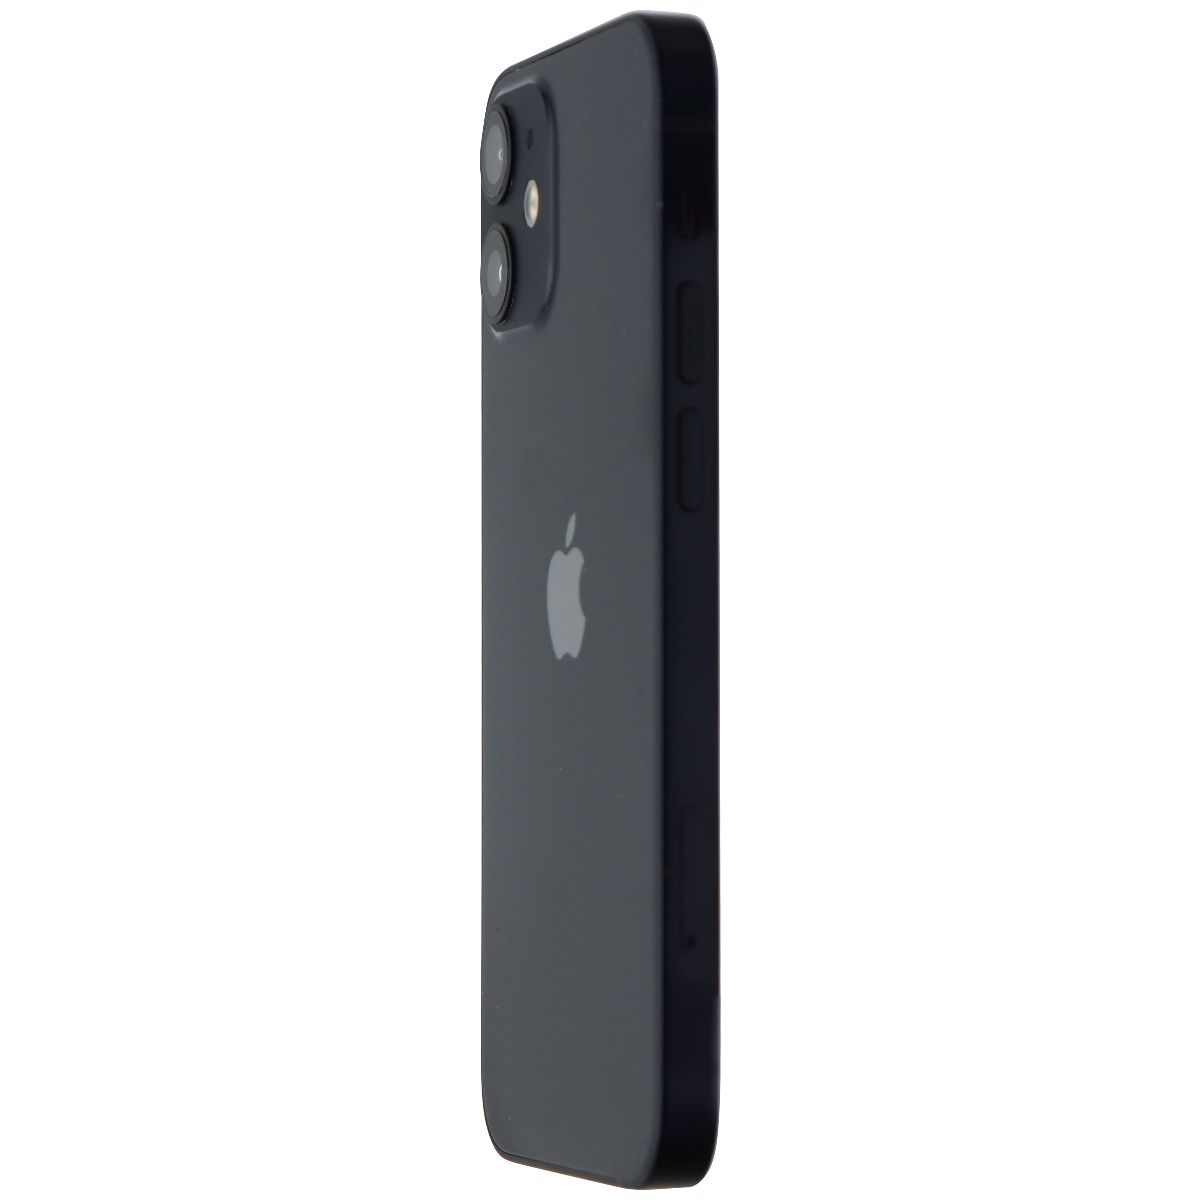 Apple iPhone 12 mini (5.4-inch) (A2176) Unlocked - 64GB/Black *Bad Face ID